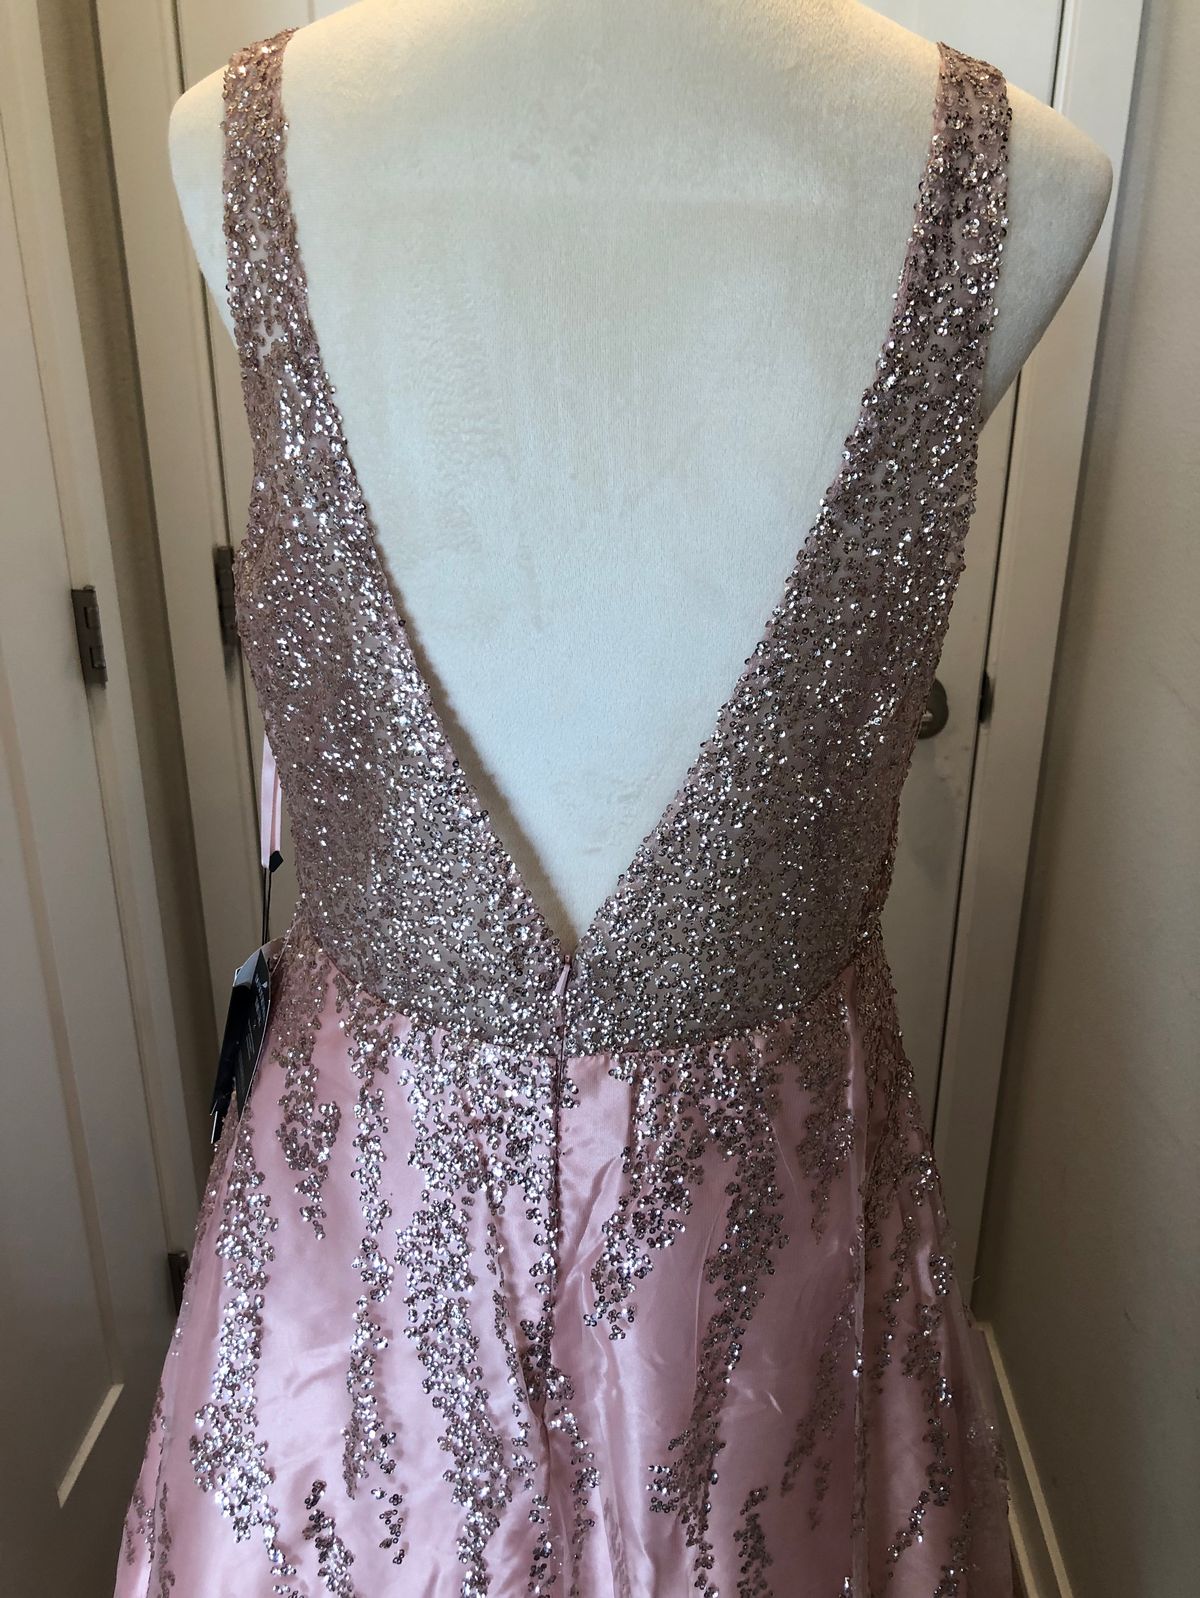 Cinderella Divine Plus Size 16 Prom Plunge Pink A-line Dress on Queenly